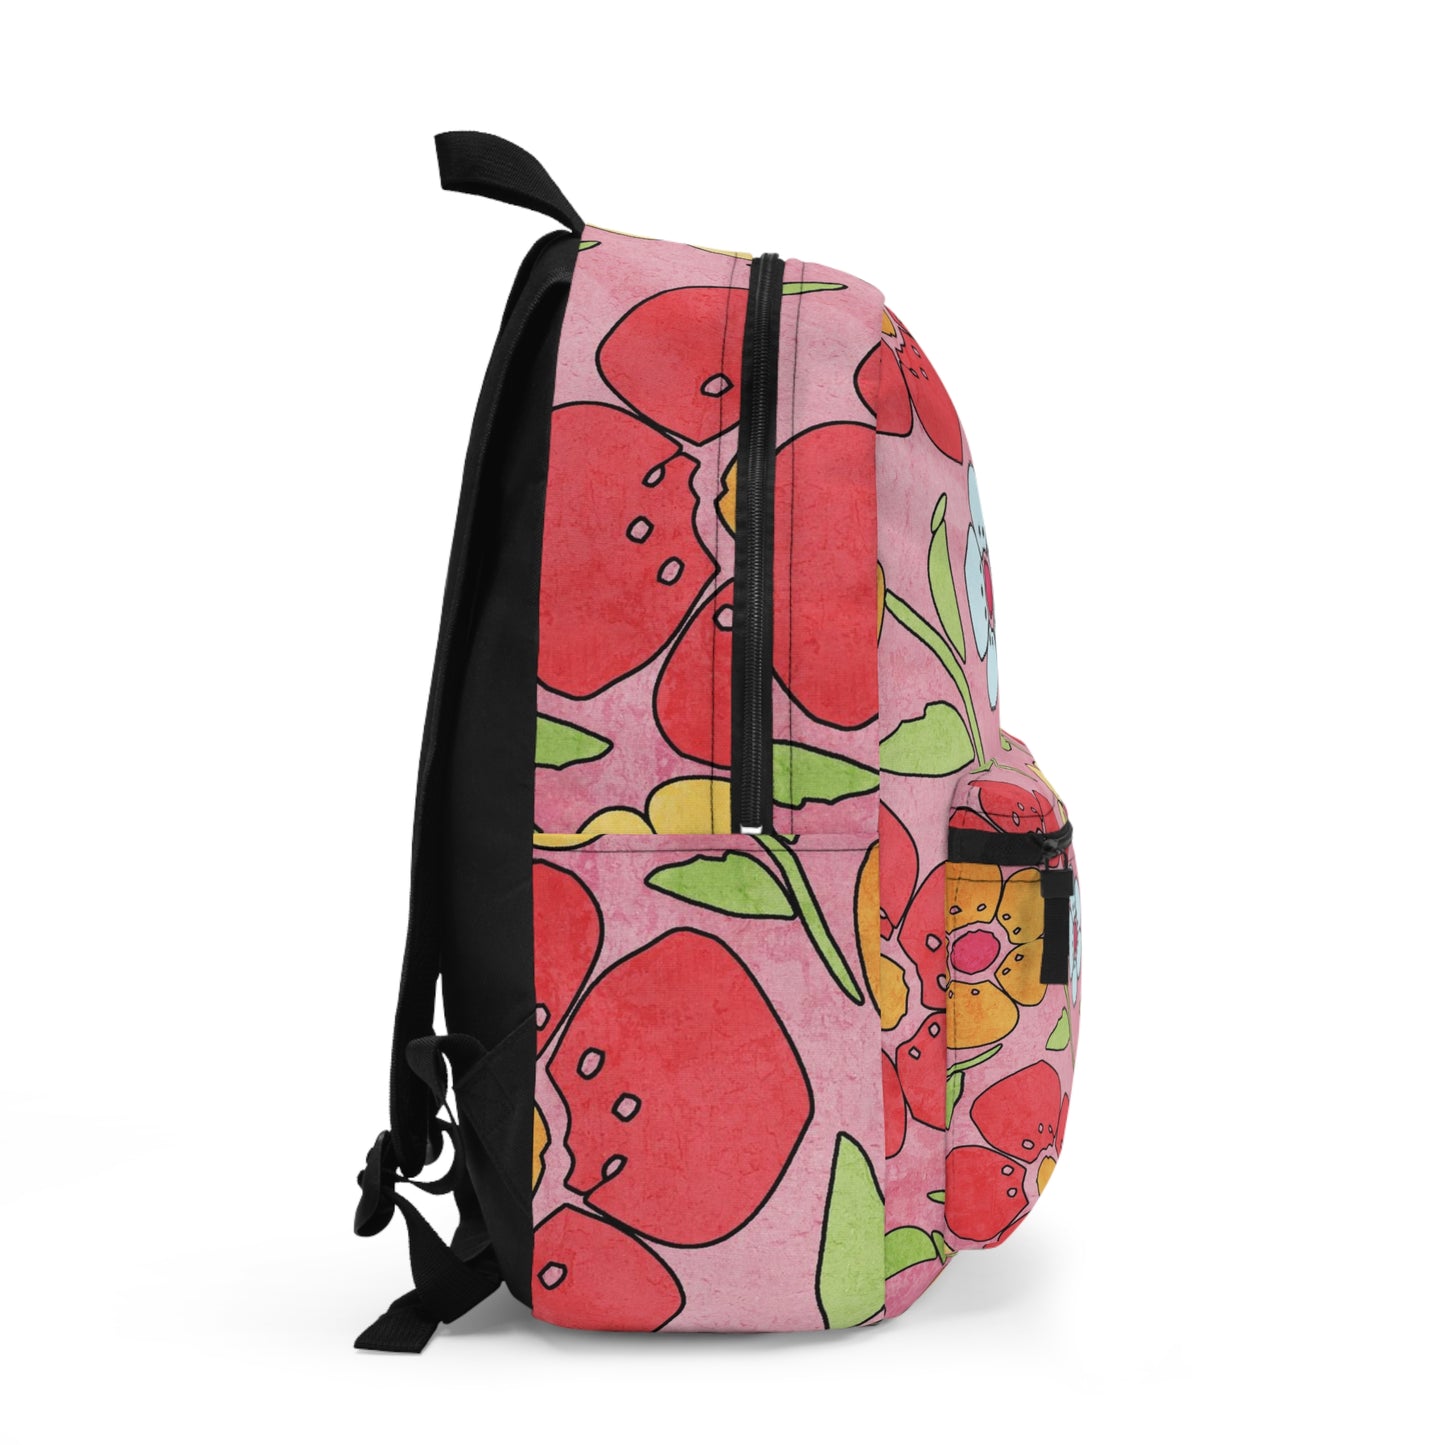 Floral Backpack, School Travel Backpack for Girls, Cute Backpack, Aesthetics Backpack, Back To School